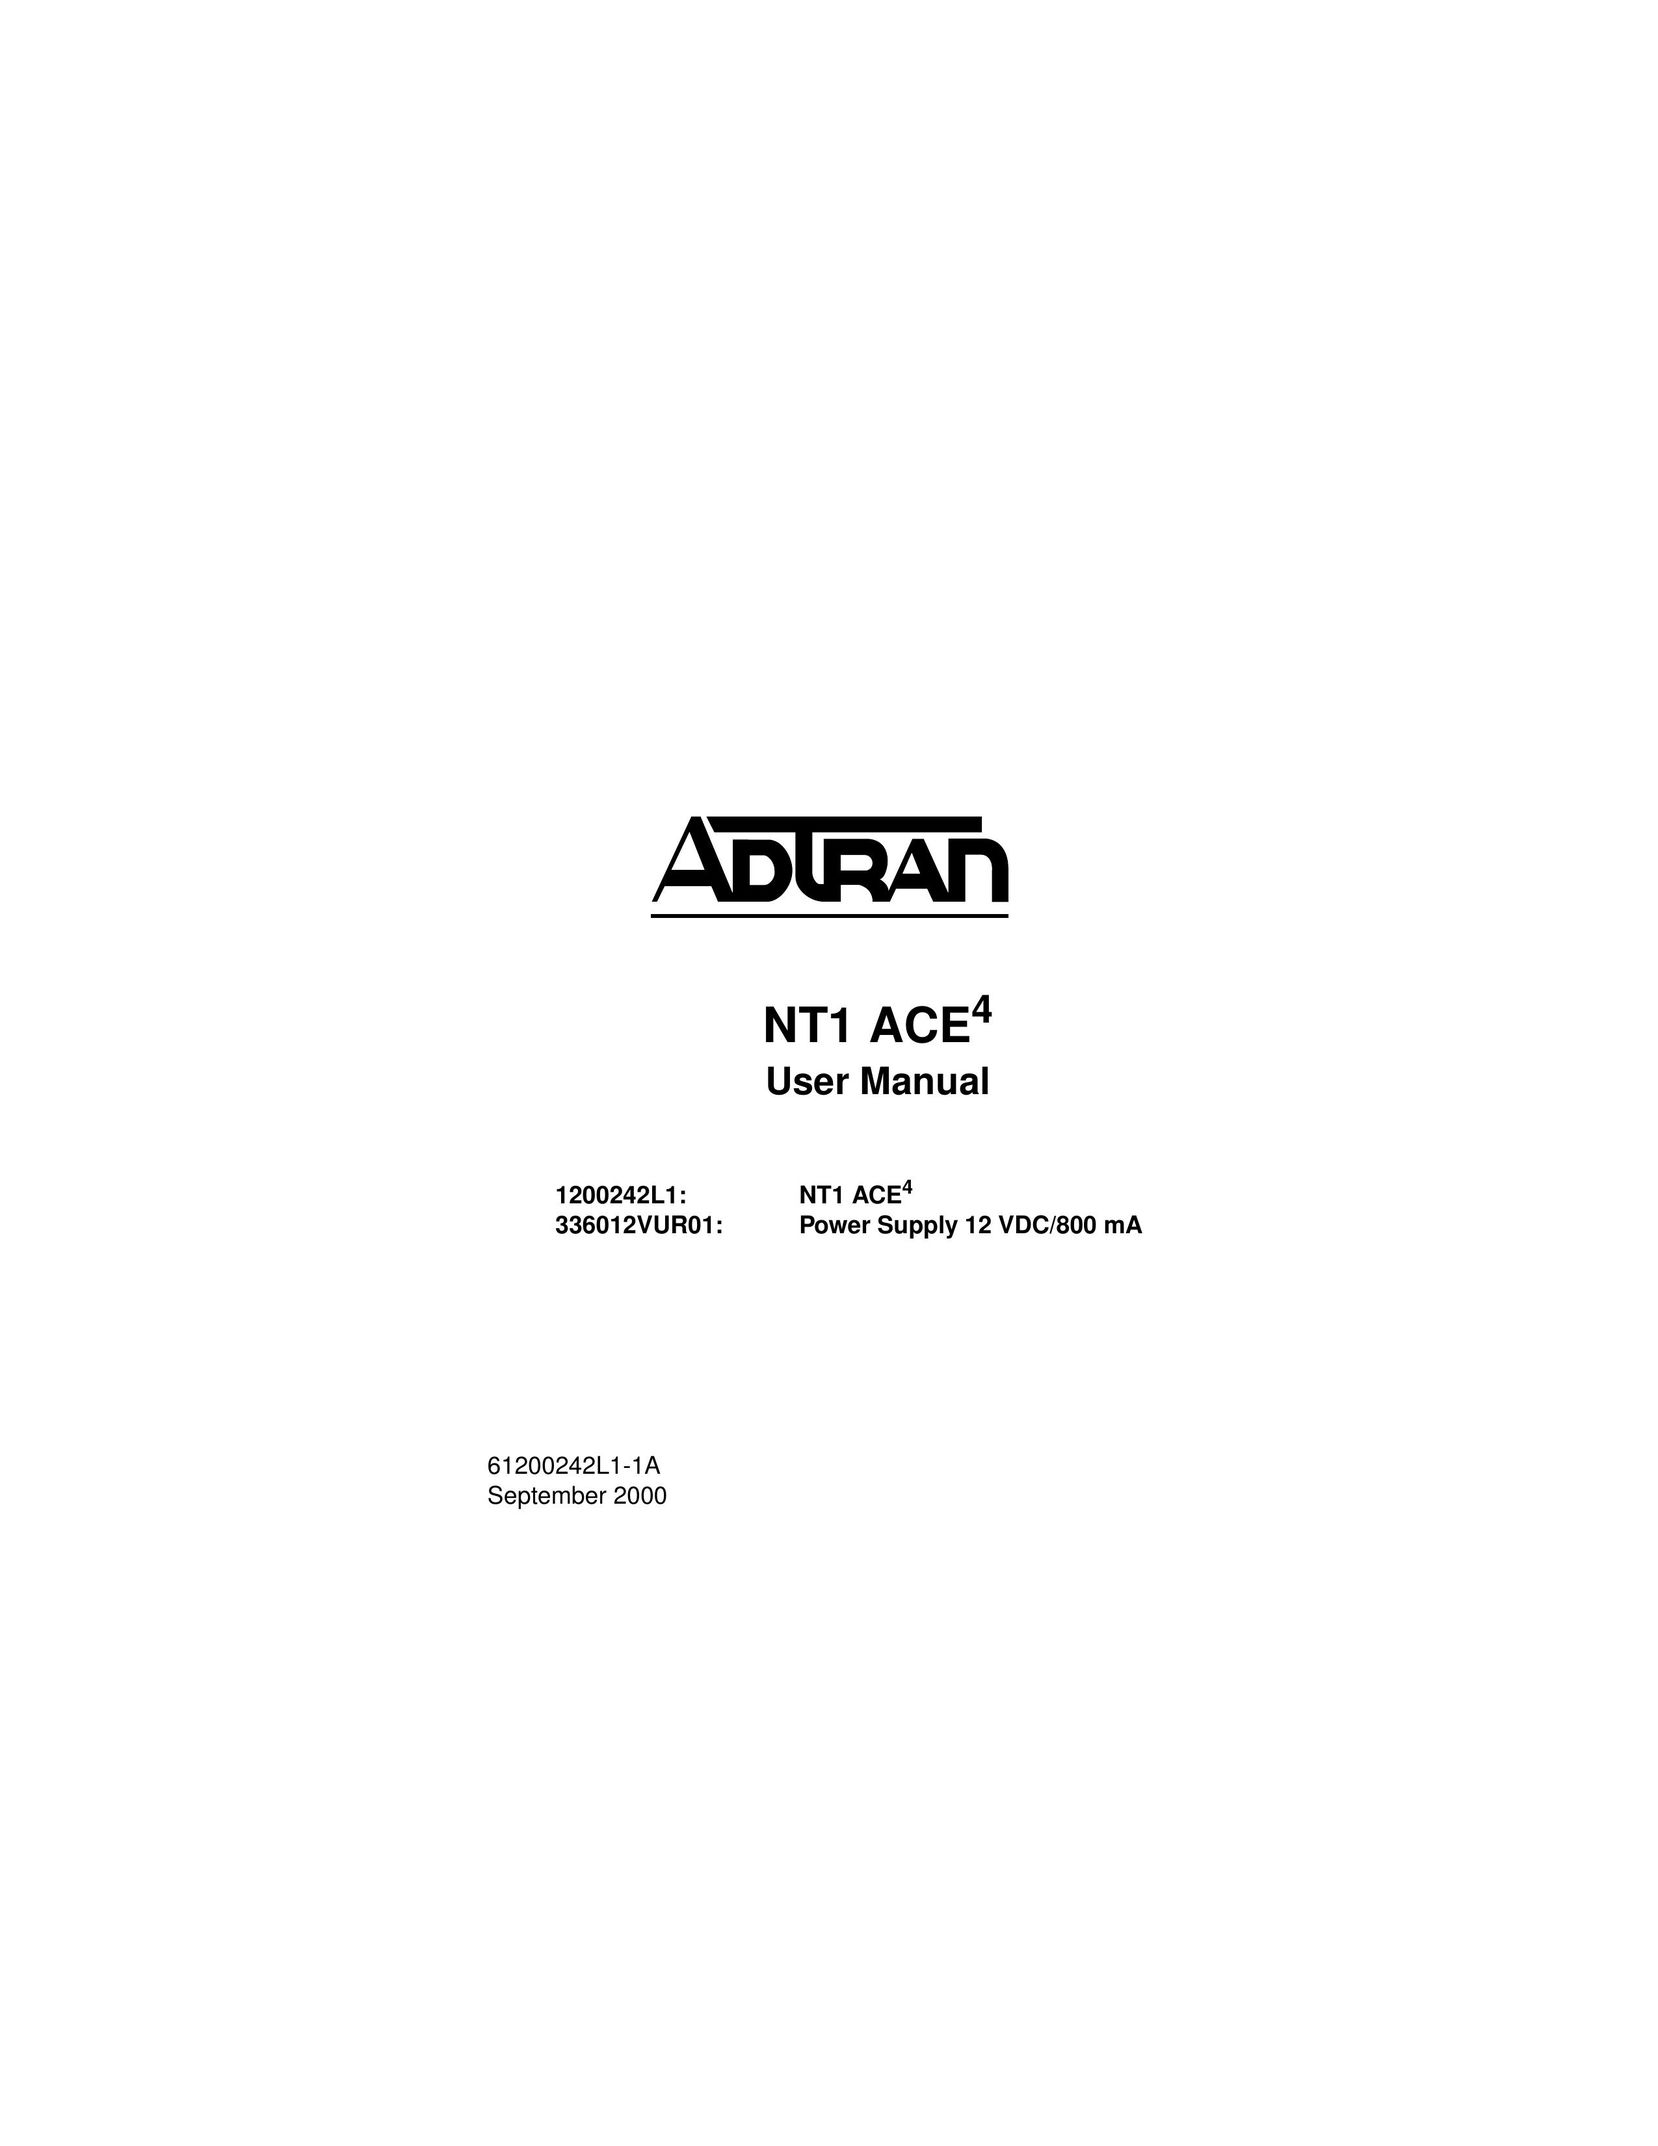 ADTRAN NT1 ACE4 Power Supply User Manual